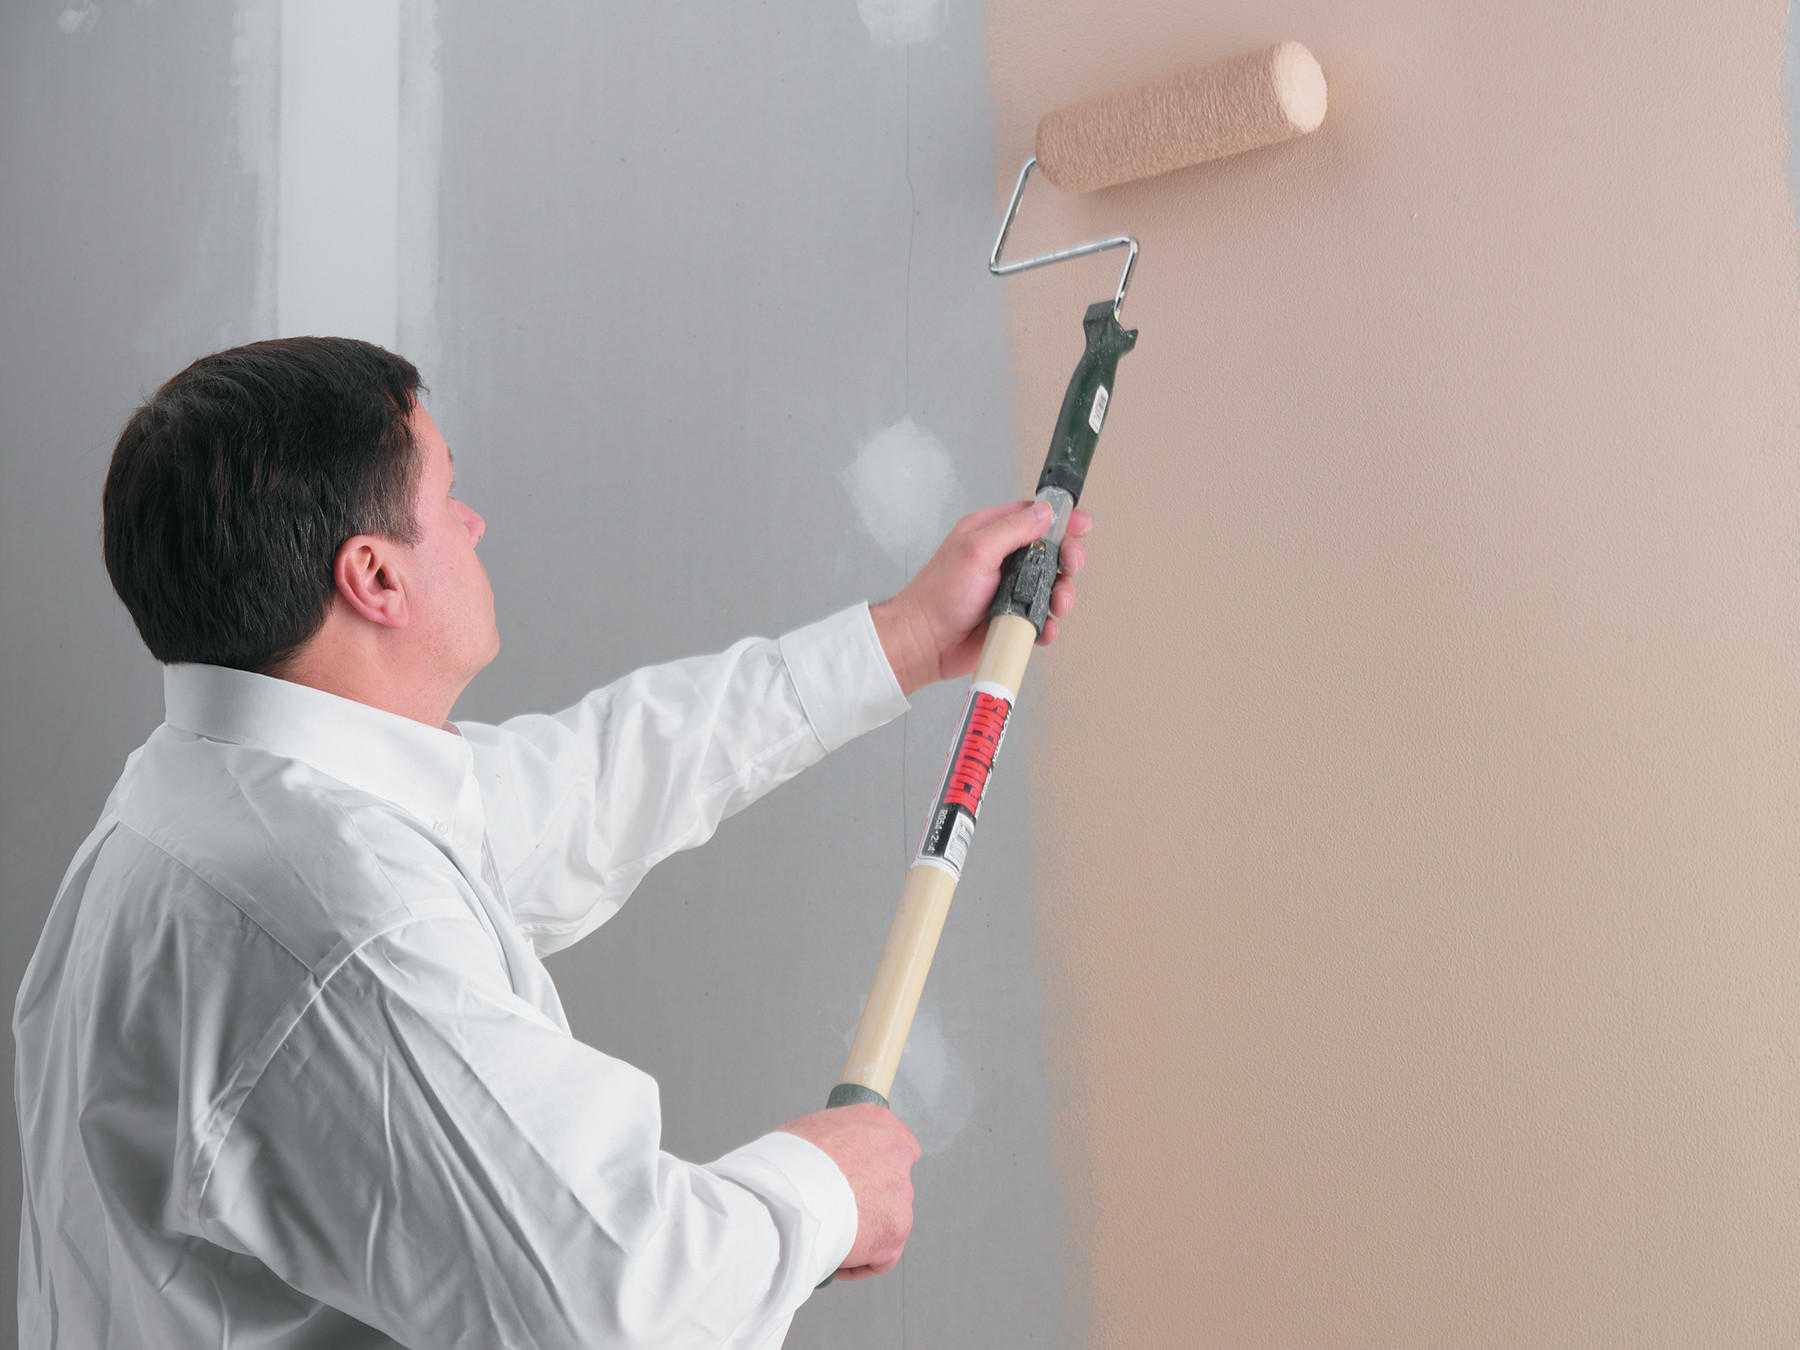 Покраска стен в в квартире своими руками: выбор красящего состава, подготовка поверхности и технология окрашивания | в мире краски